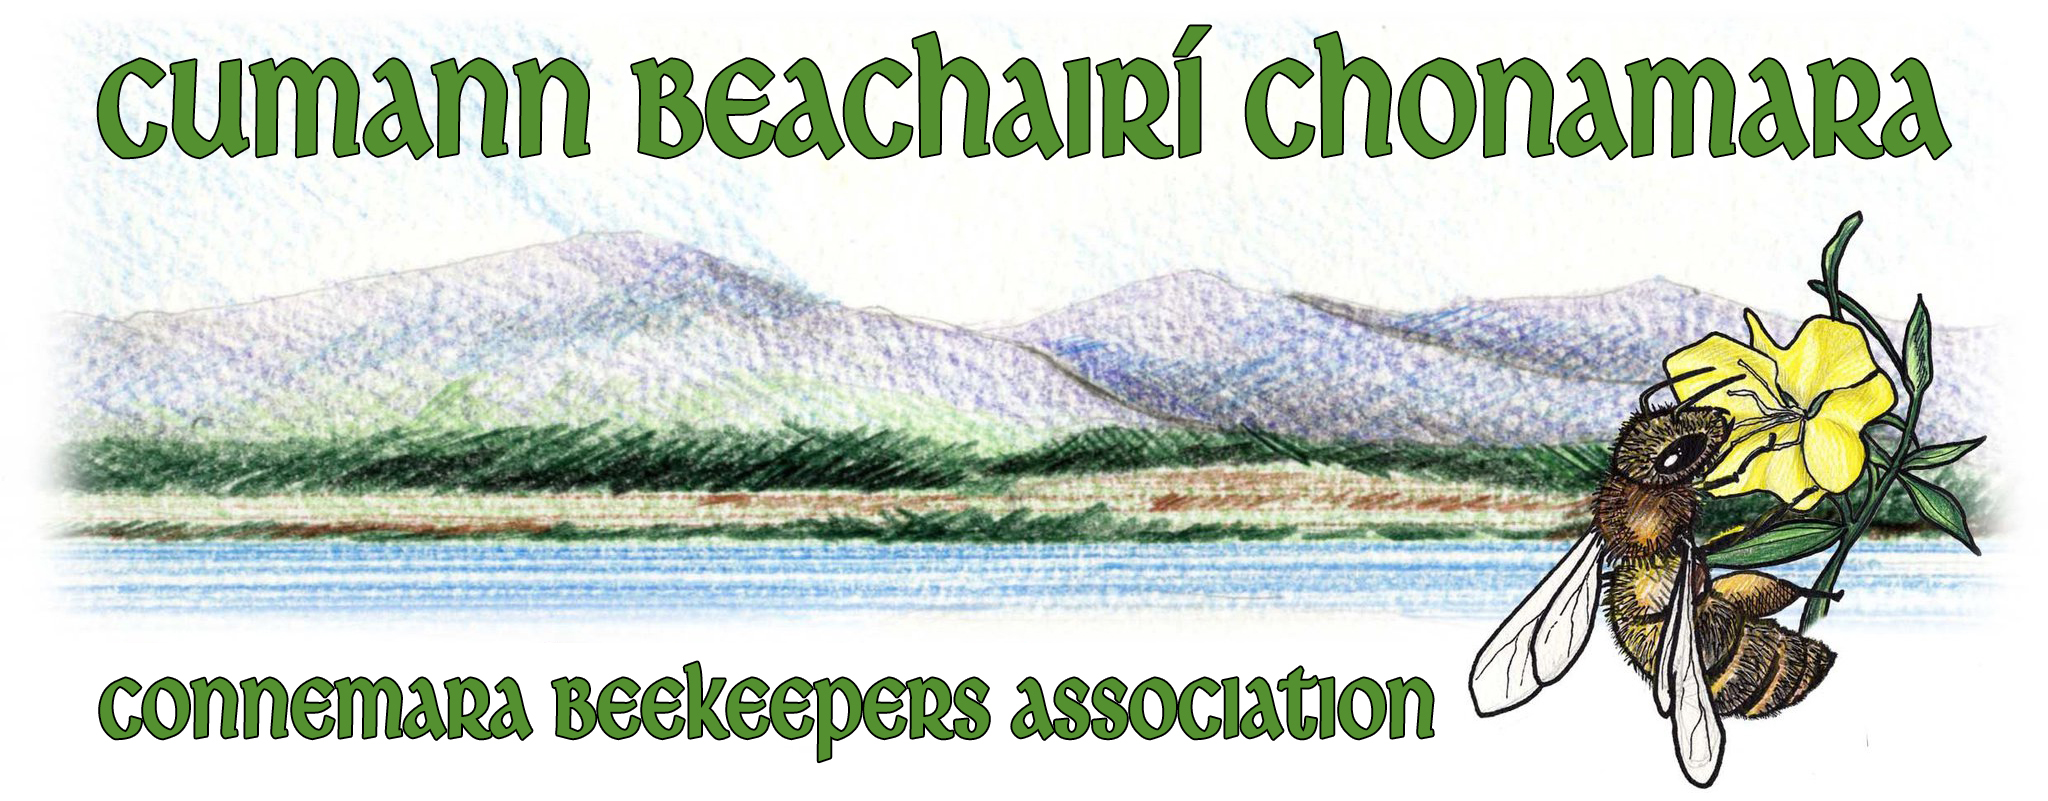 Connemara Beekeepers Association